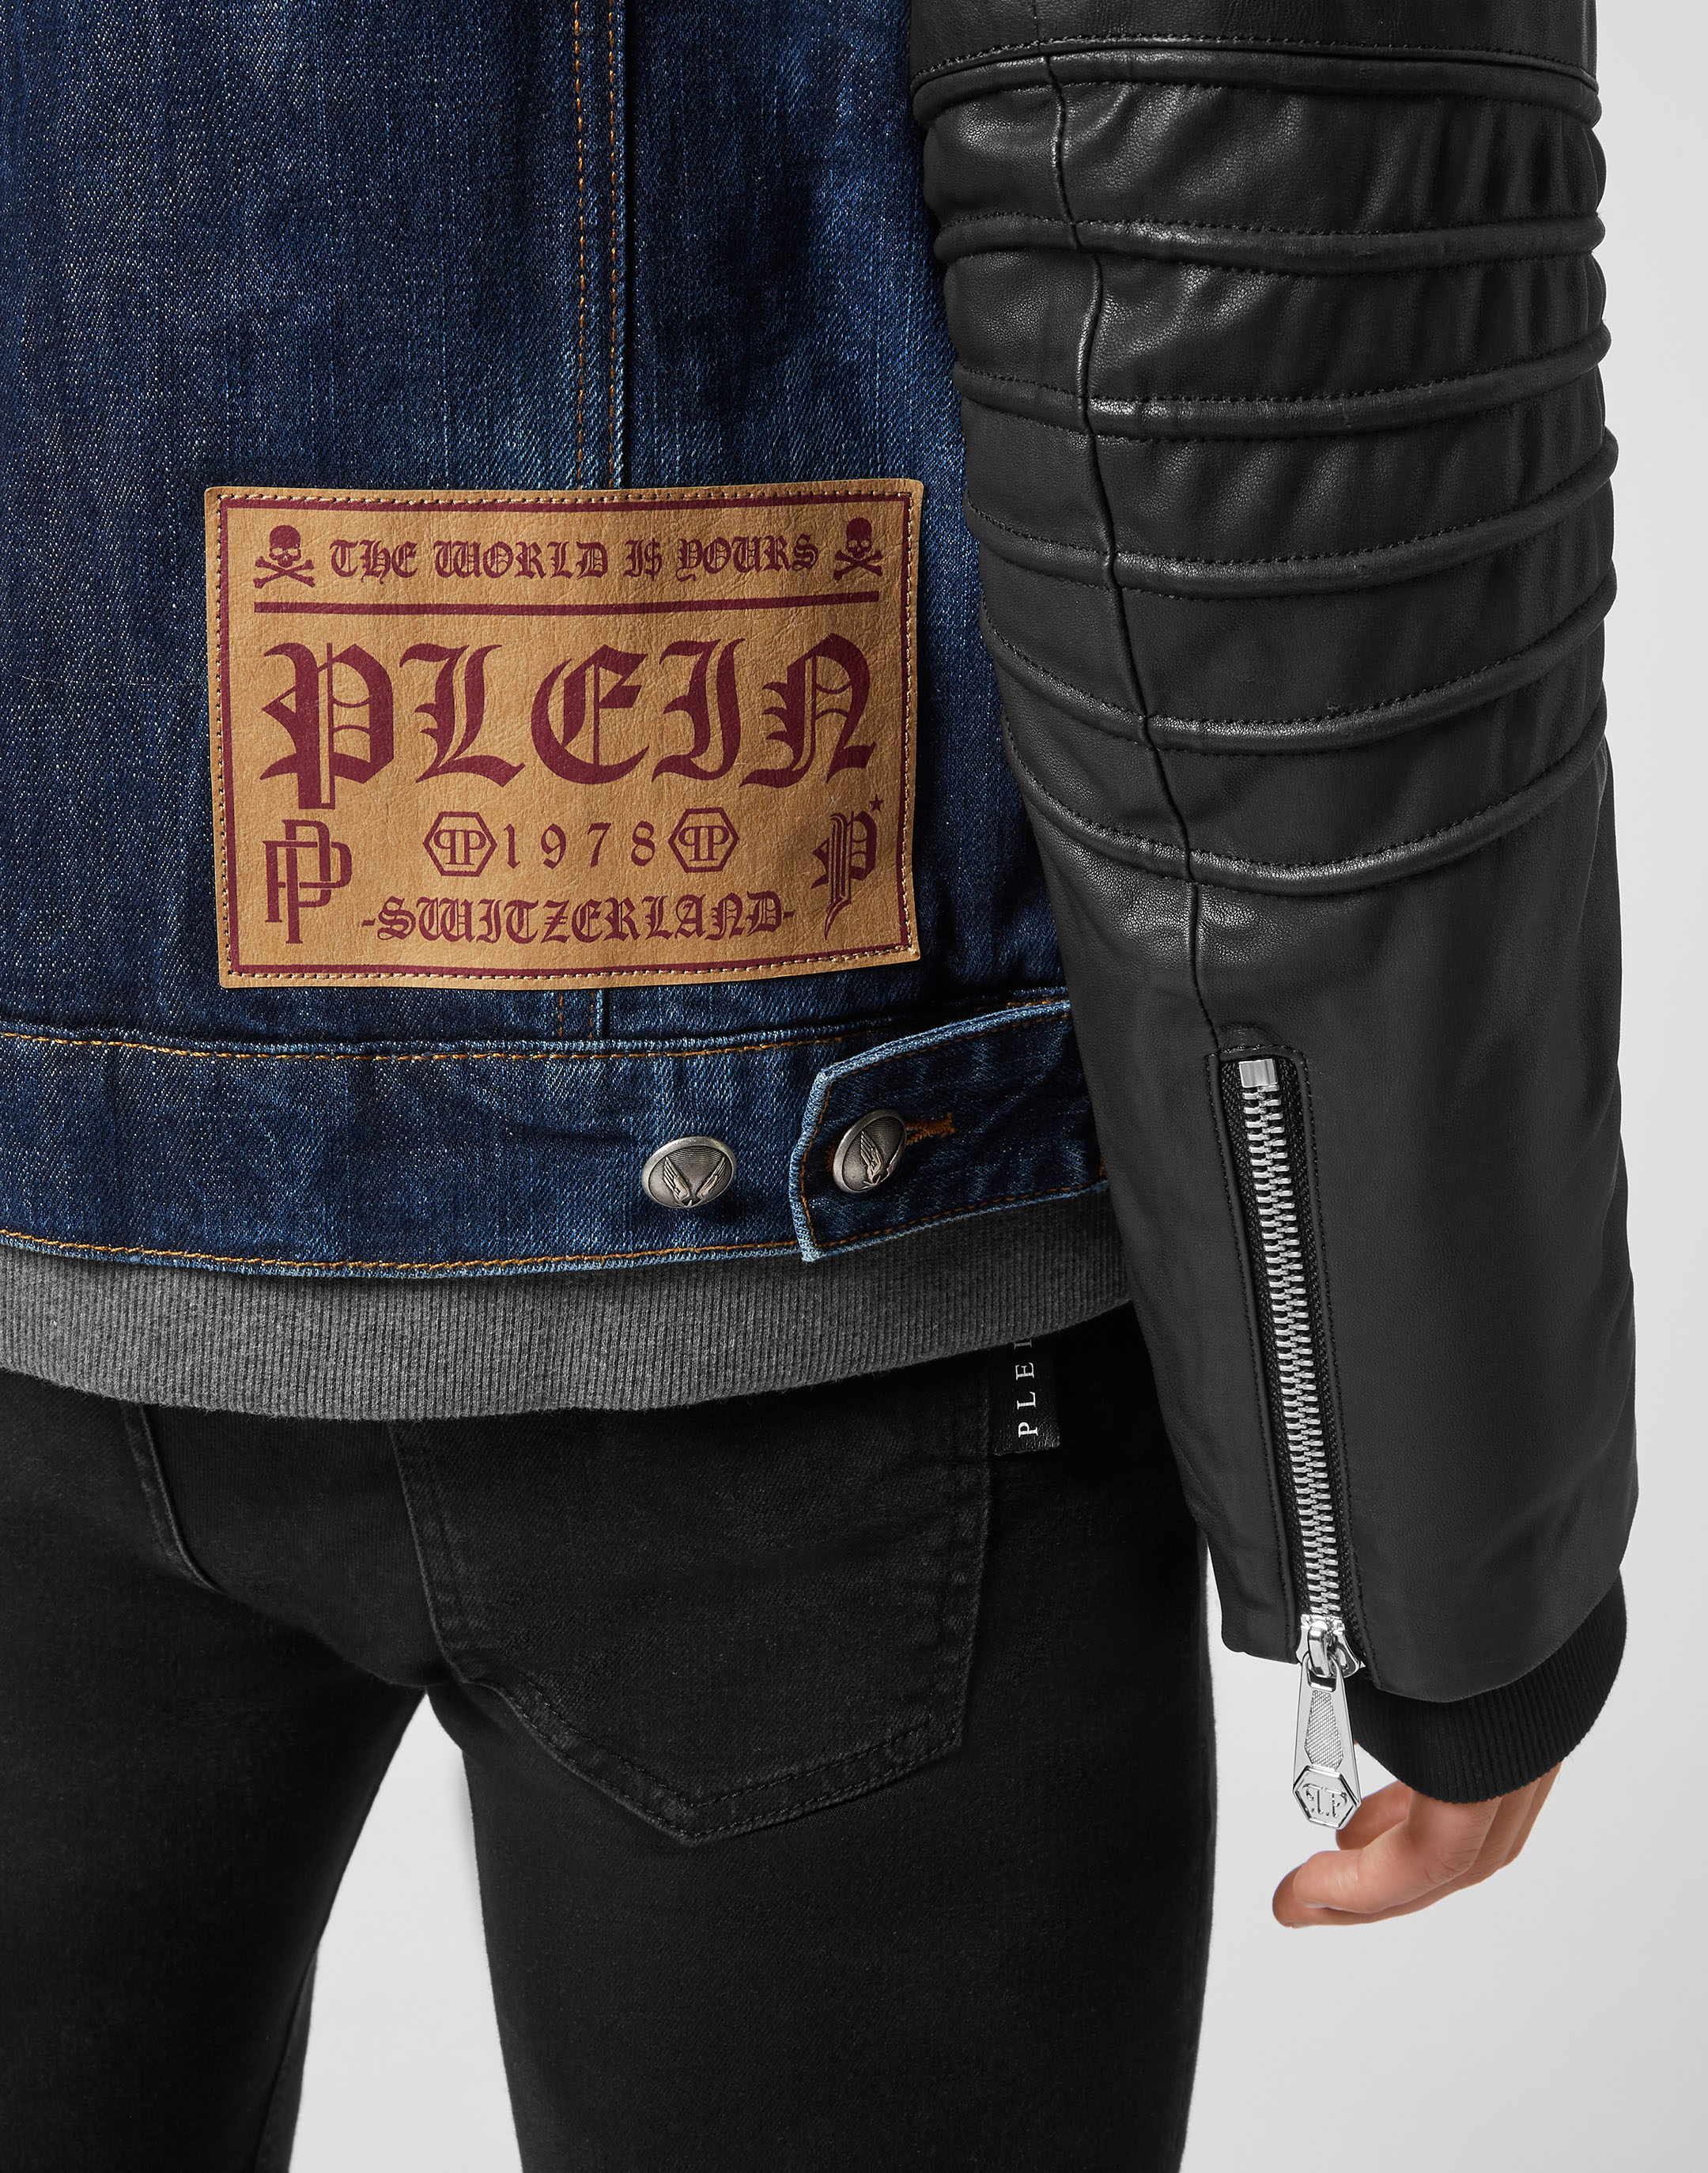 Philipp Plein Leather Panel Denim Jacket - ShopStyle